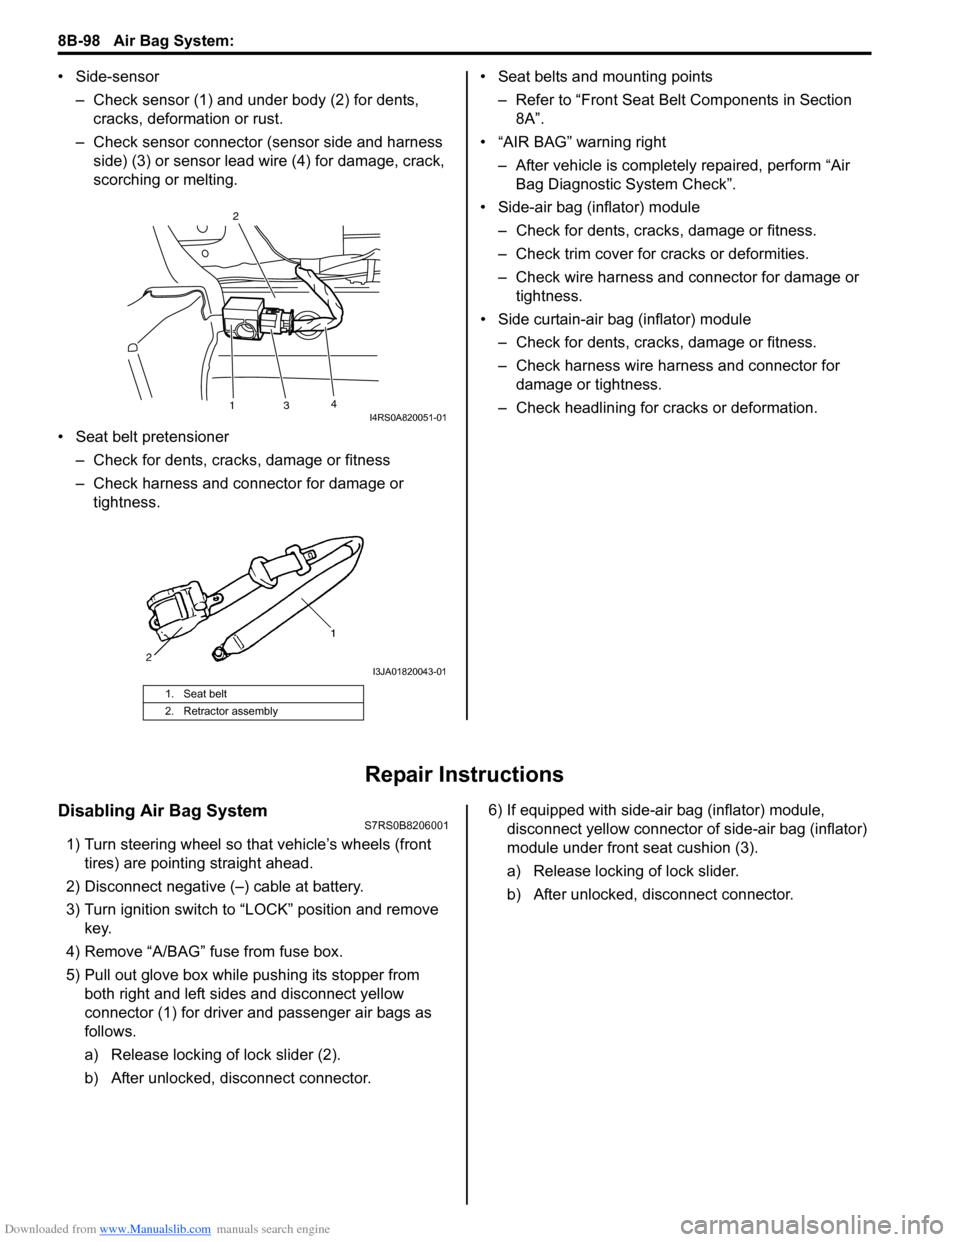 SUZUKI SWIFT 2004 2.G Service Workshop Manual Downloaded from www.Manualslib.com manuals search engine 8B-98 Air Bag System: 
• Side-sensor– Check sensor (1) and under body (2) for dents, cracks, deformation or rust.
– Check sensor connecto